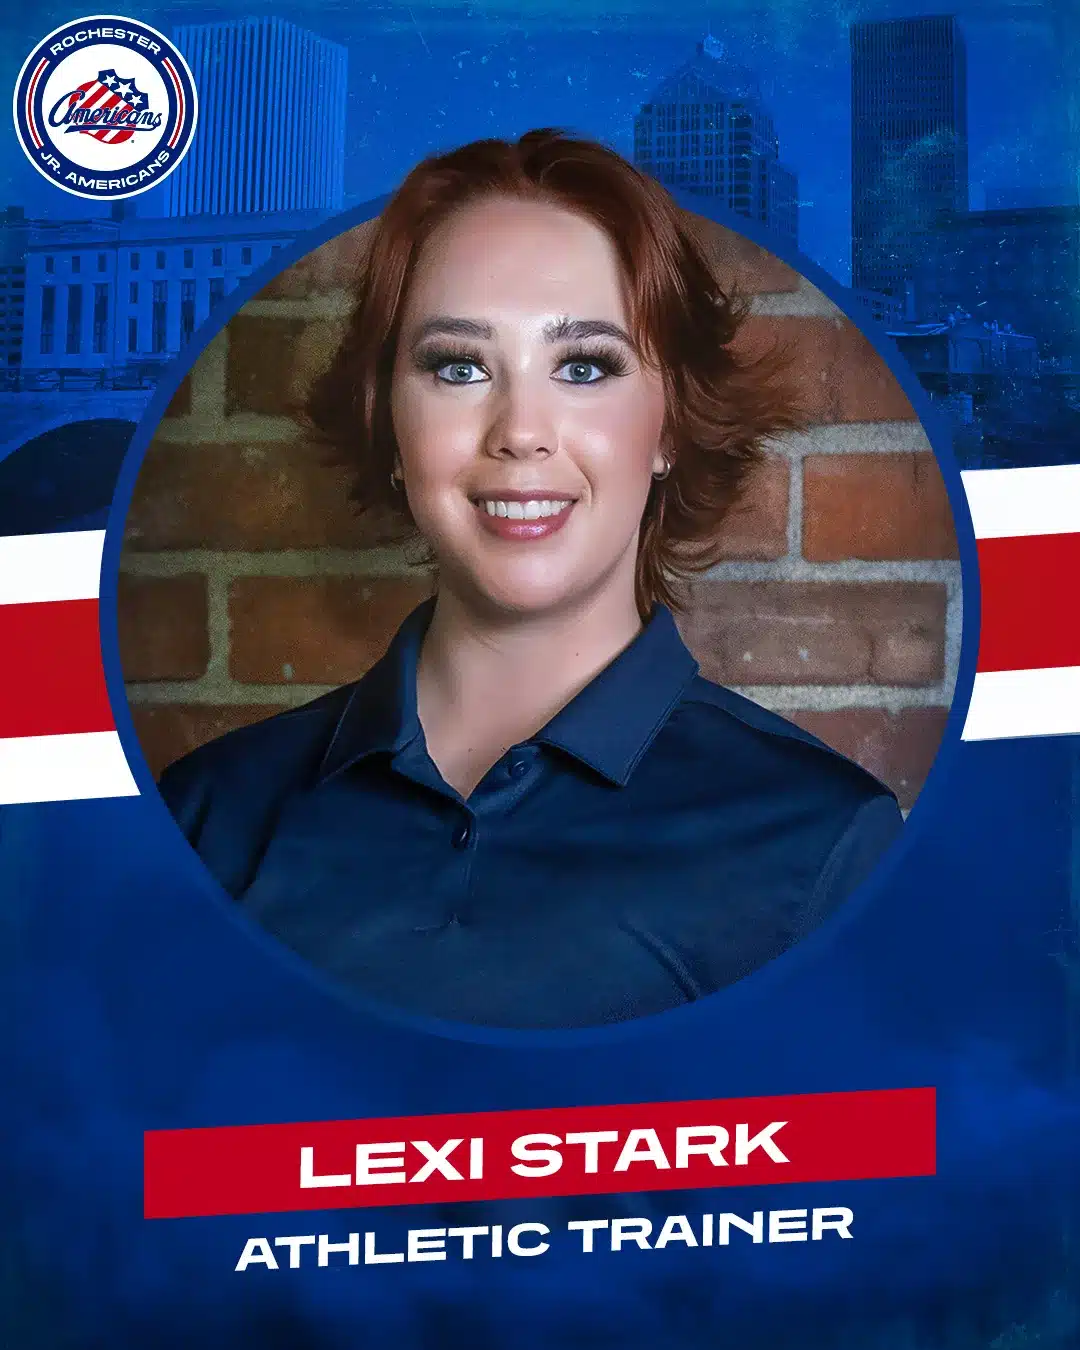 Lexi Stark